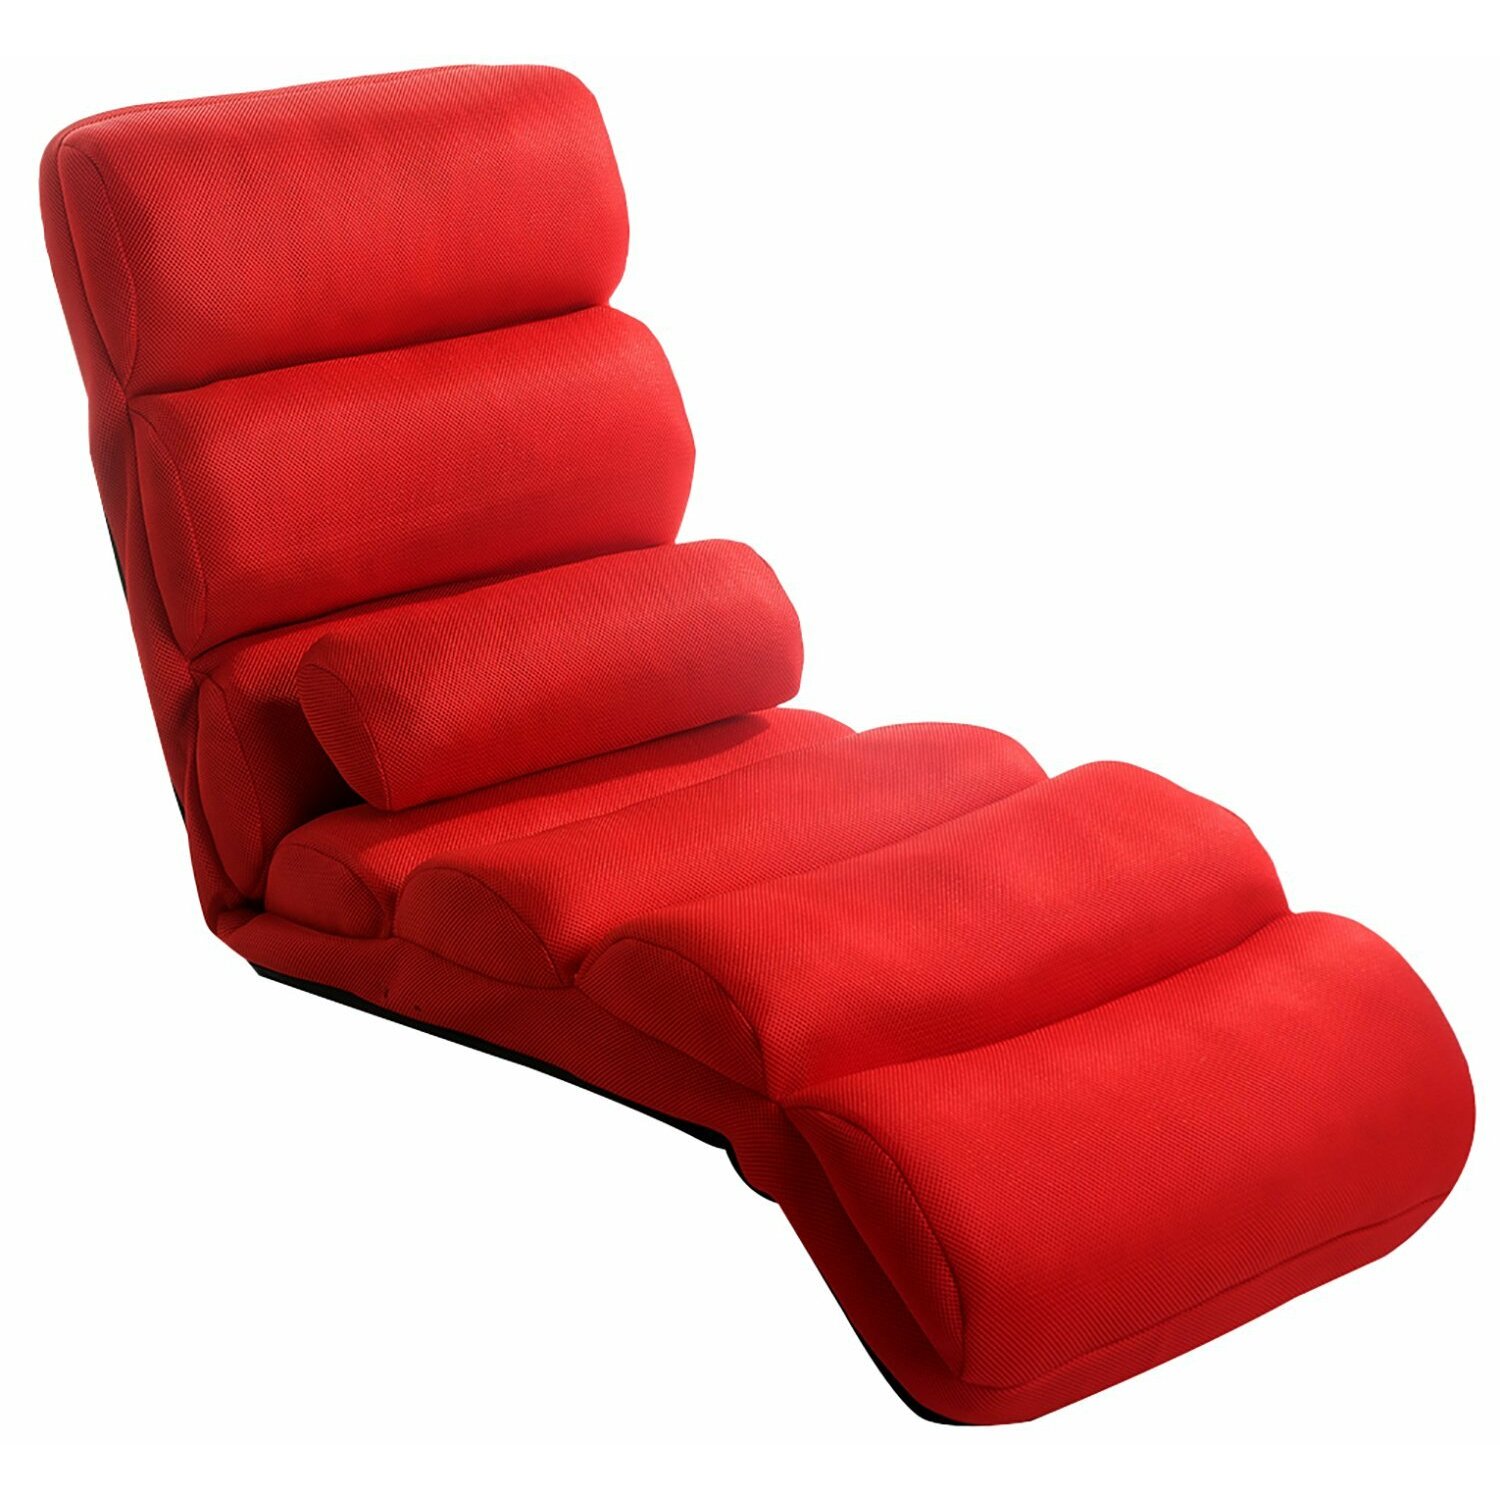 Merax Convertible Lounge Chair & Reviews | Wayfair.ca